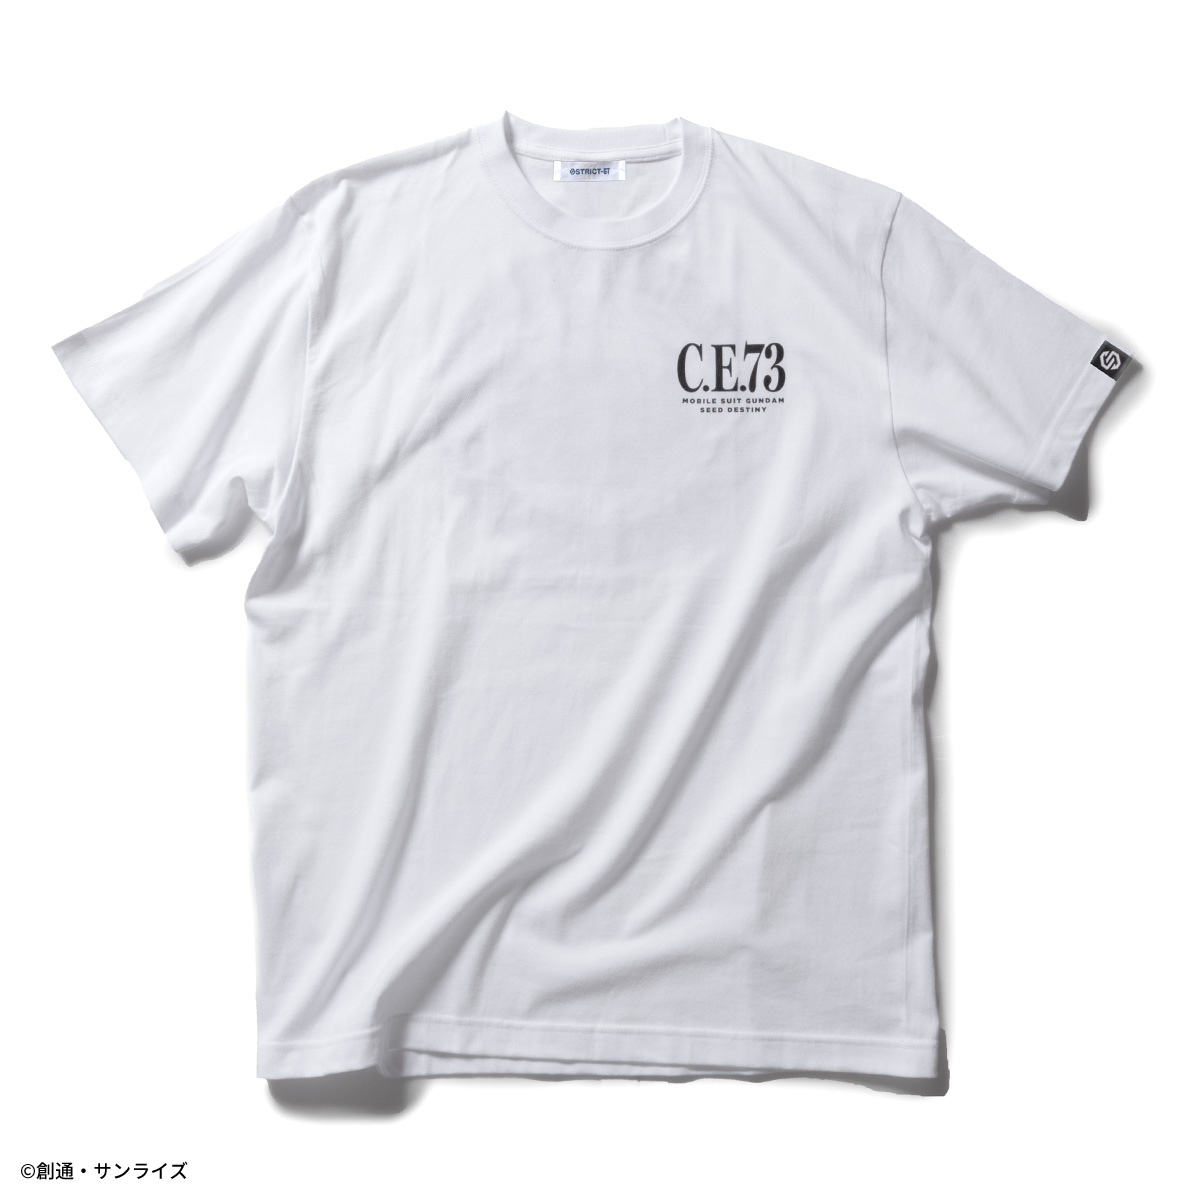 STRICT-G『機動戦士ガンダムSEED DESTINY』半袖Tシャツ ORB UNIONロゴマーク柄